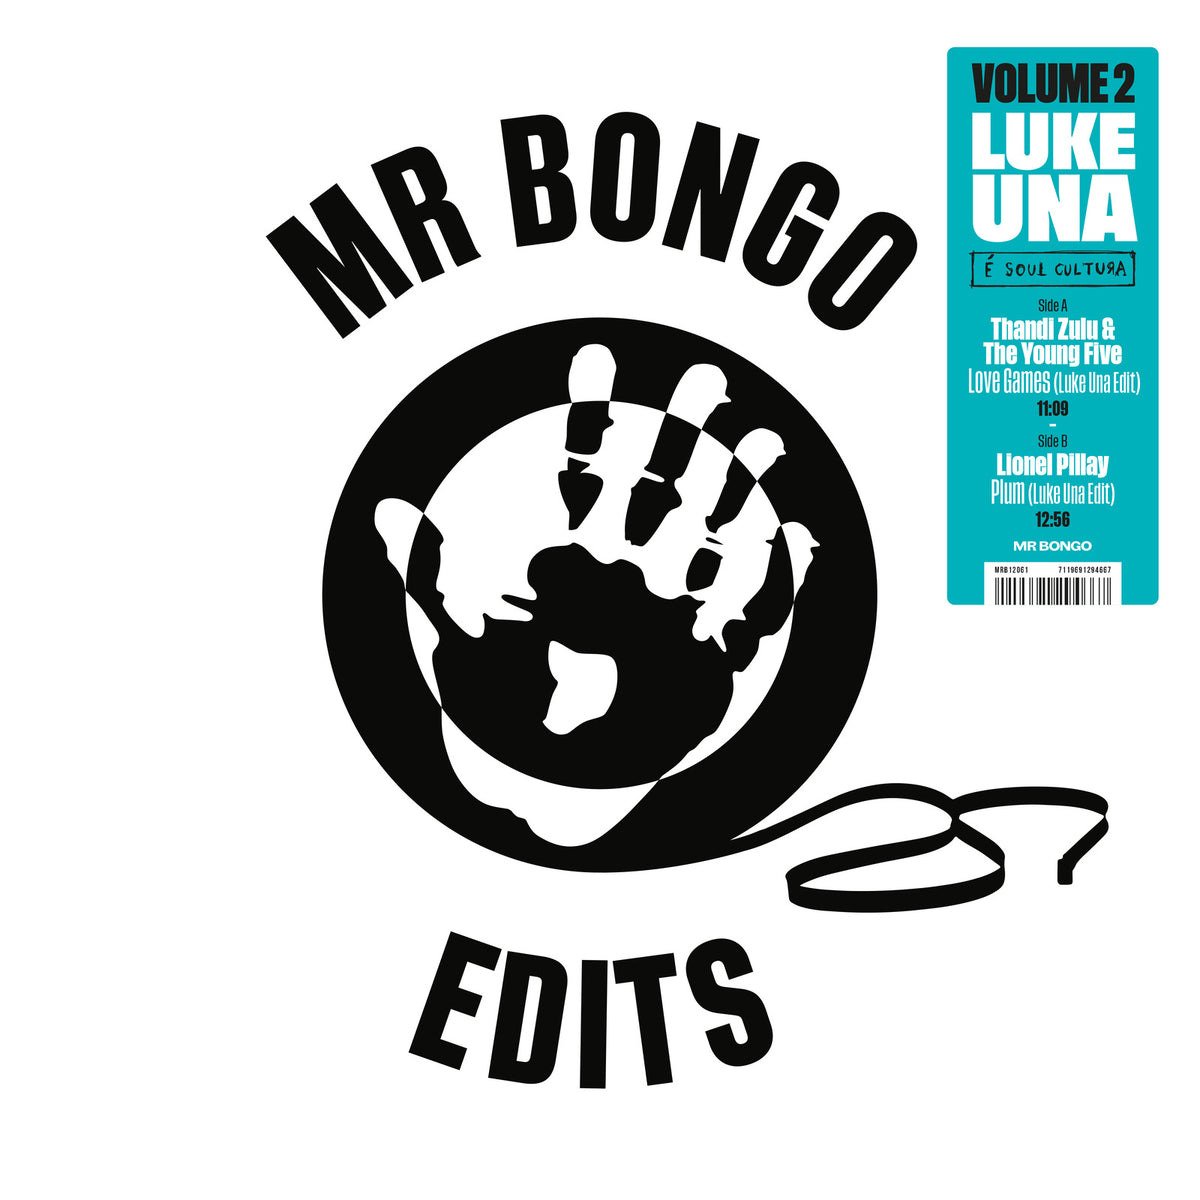 CD Shop - V/A MR BONGO EDITS VOLUME 2: LUKE UNA